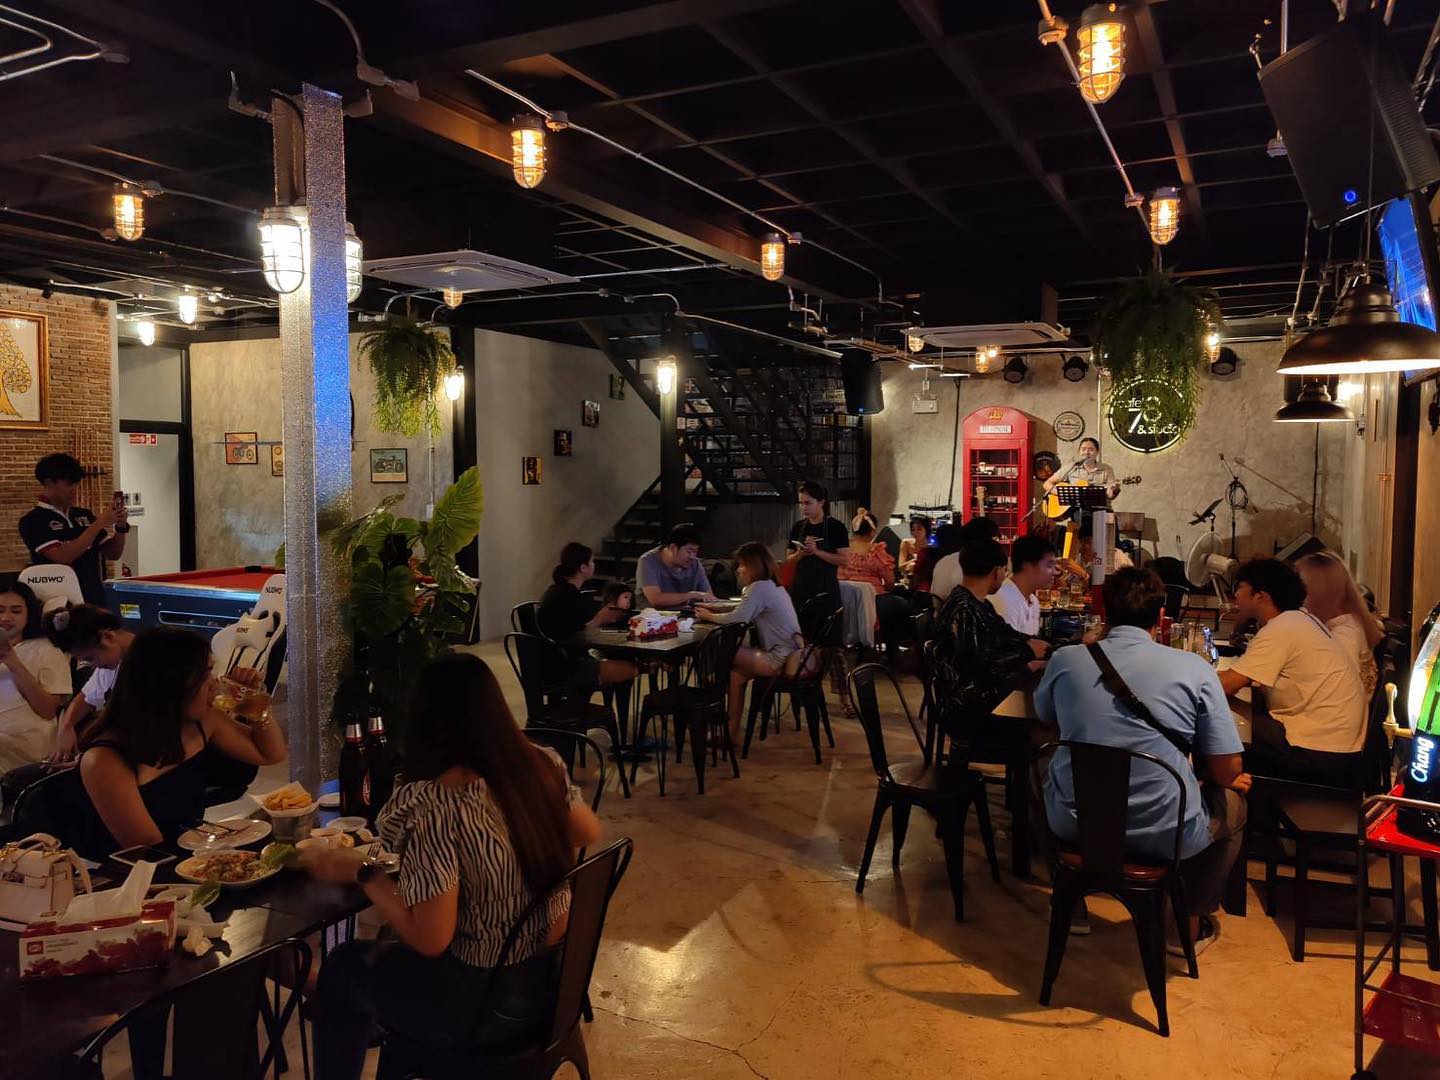 78 Cafe' & Studio (78 คาเฟ่ แอนด์ สตูดิโอ) : Bangkok (กรุงเทพมหานคร)